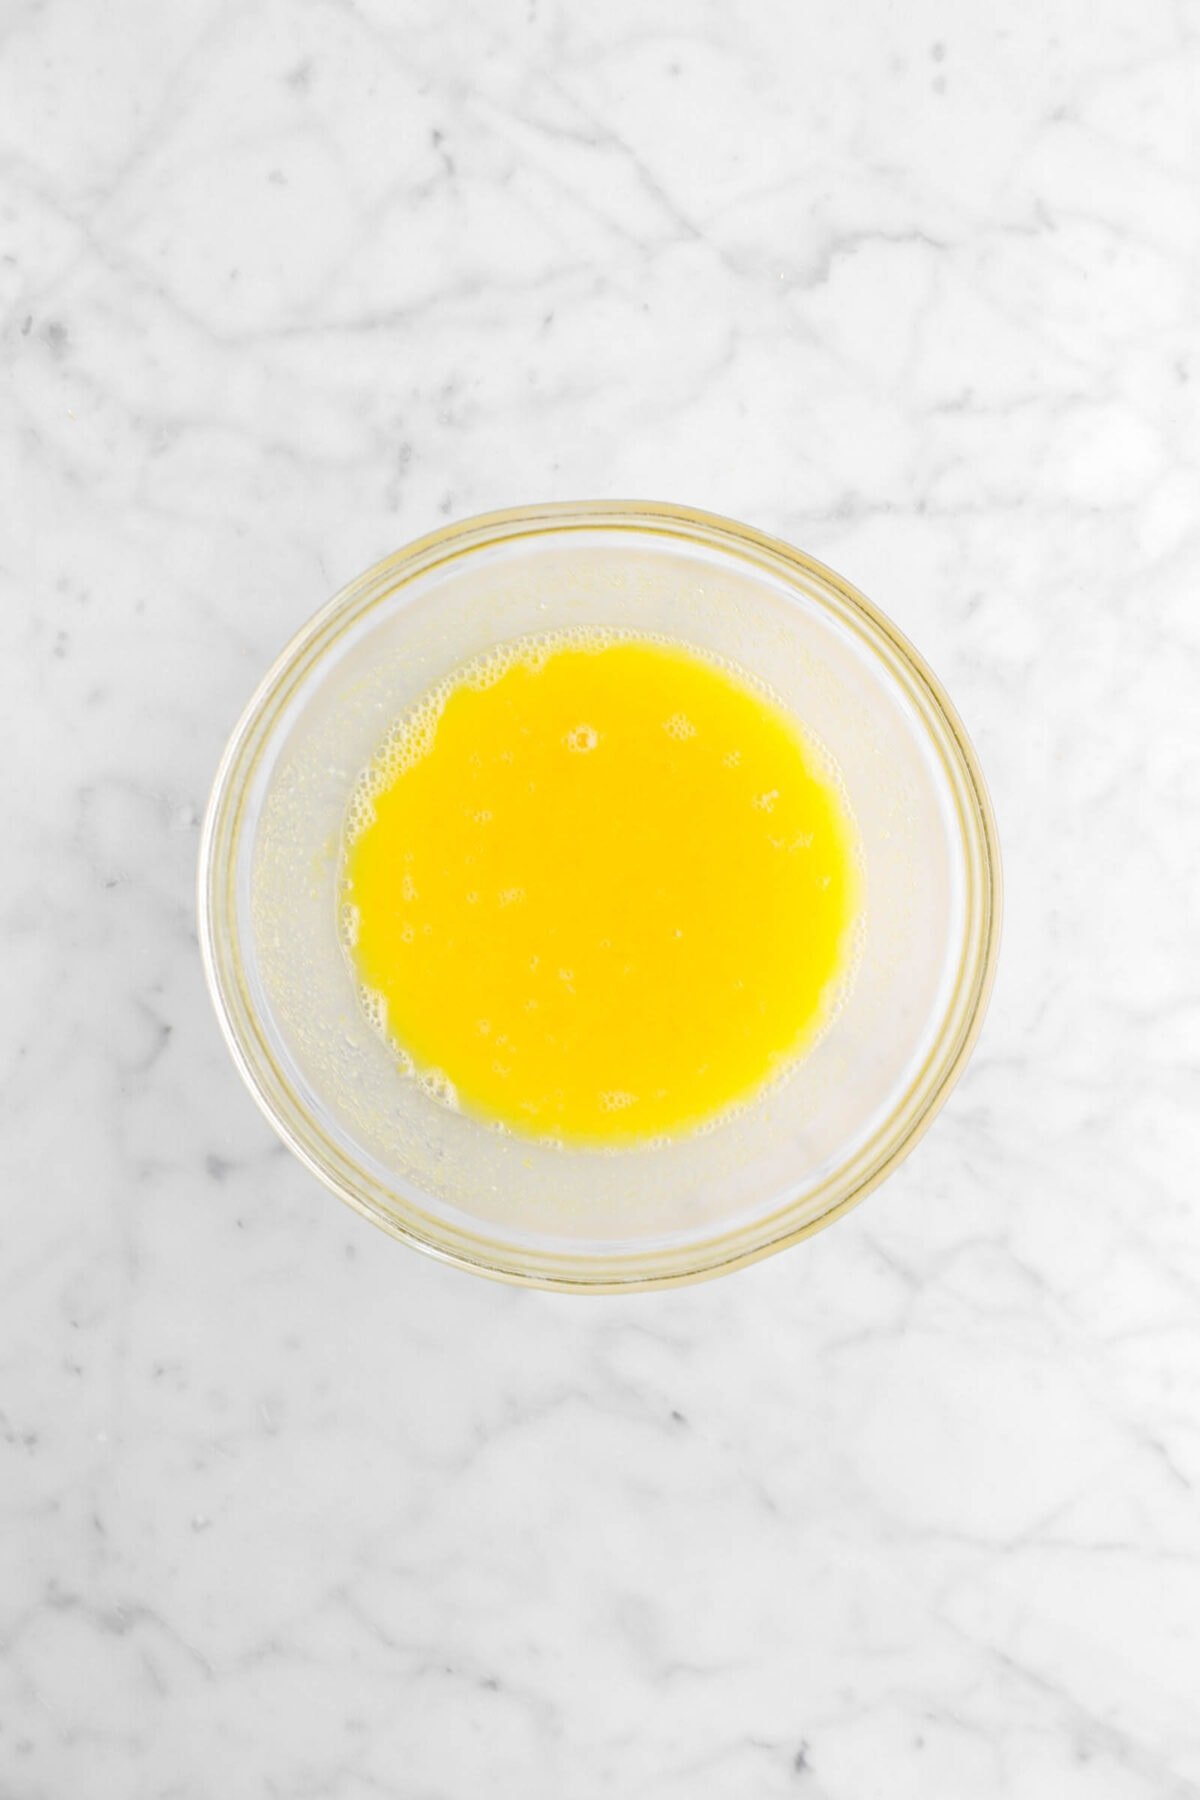 egg yolks, lemon juice, and sugar mixed together